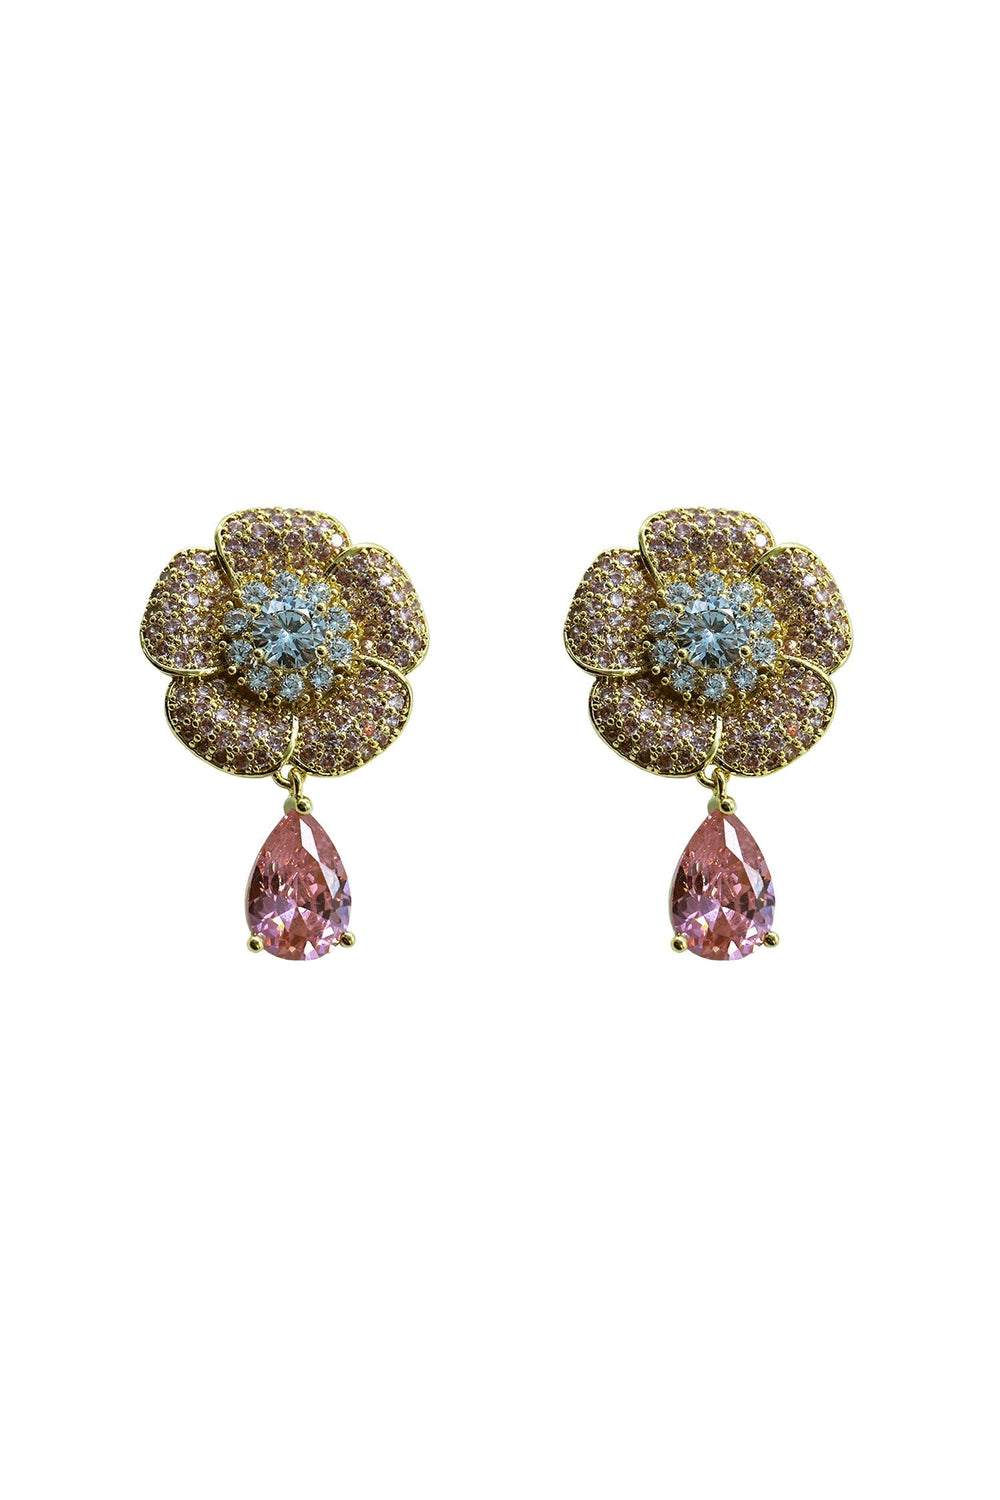 Danielle Gold Diamante Flower Earrings